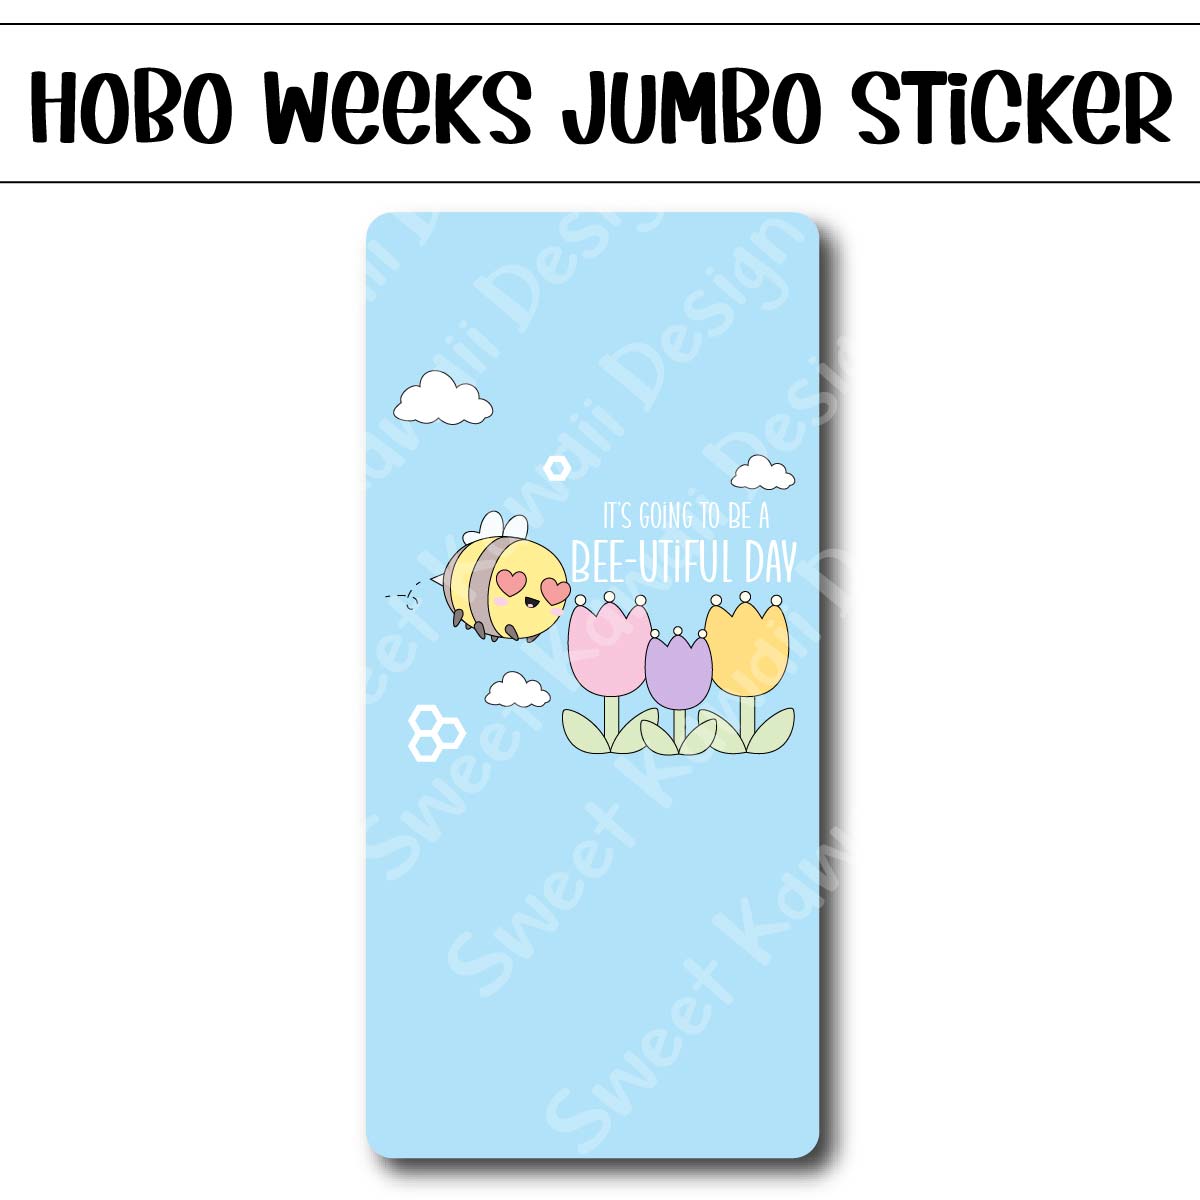 Kawaii Jumbo Sticker - Beeutiful - Size Options Available